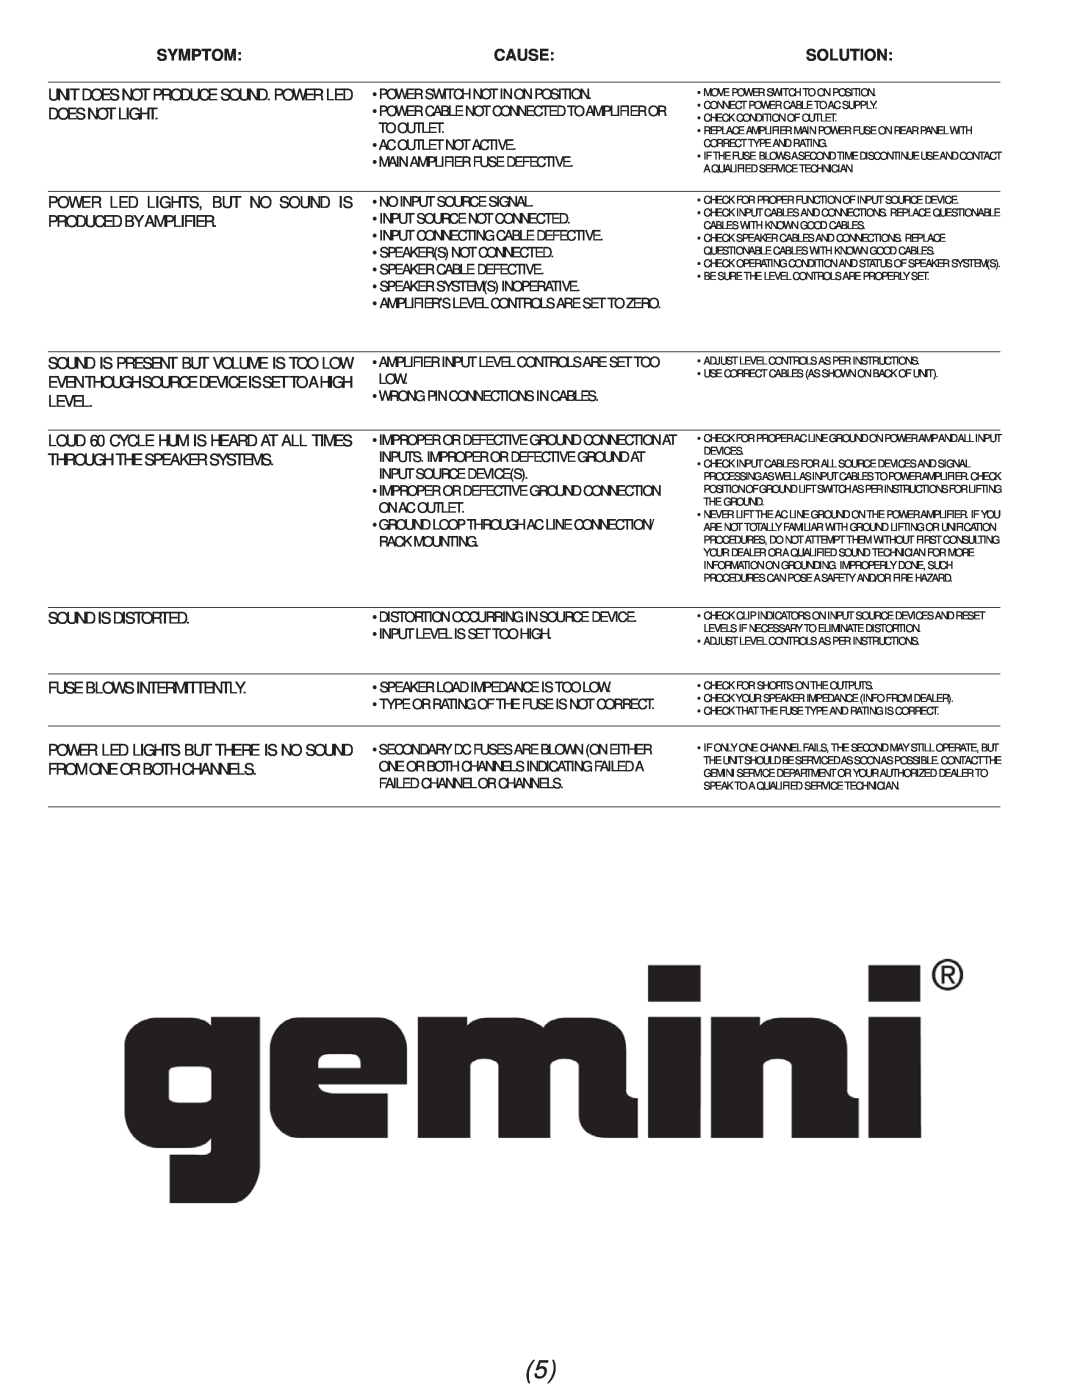 Gemini P-07 manual Symptom 